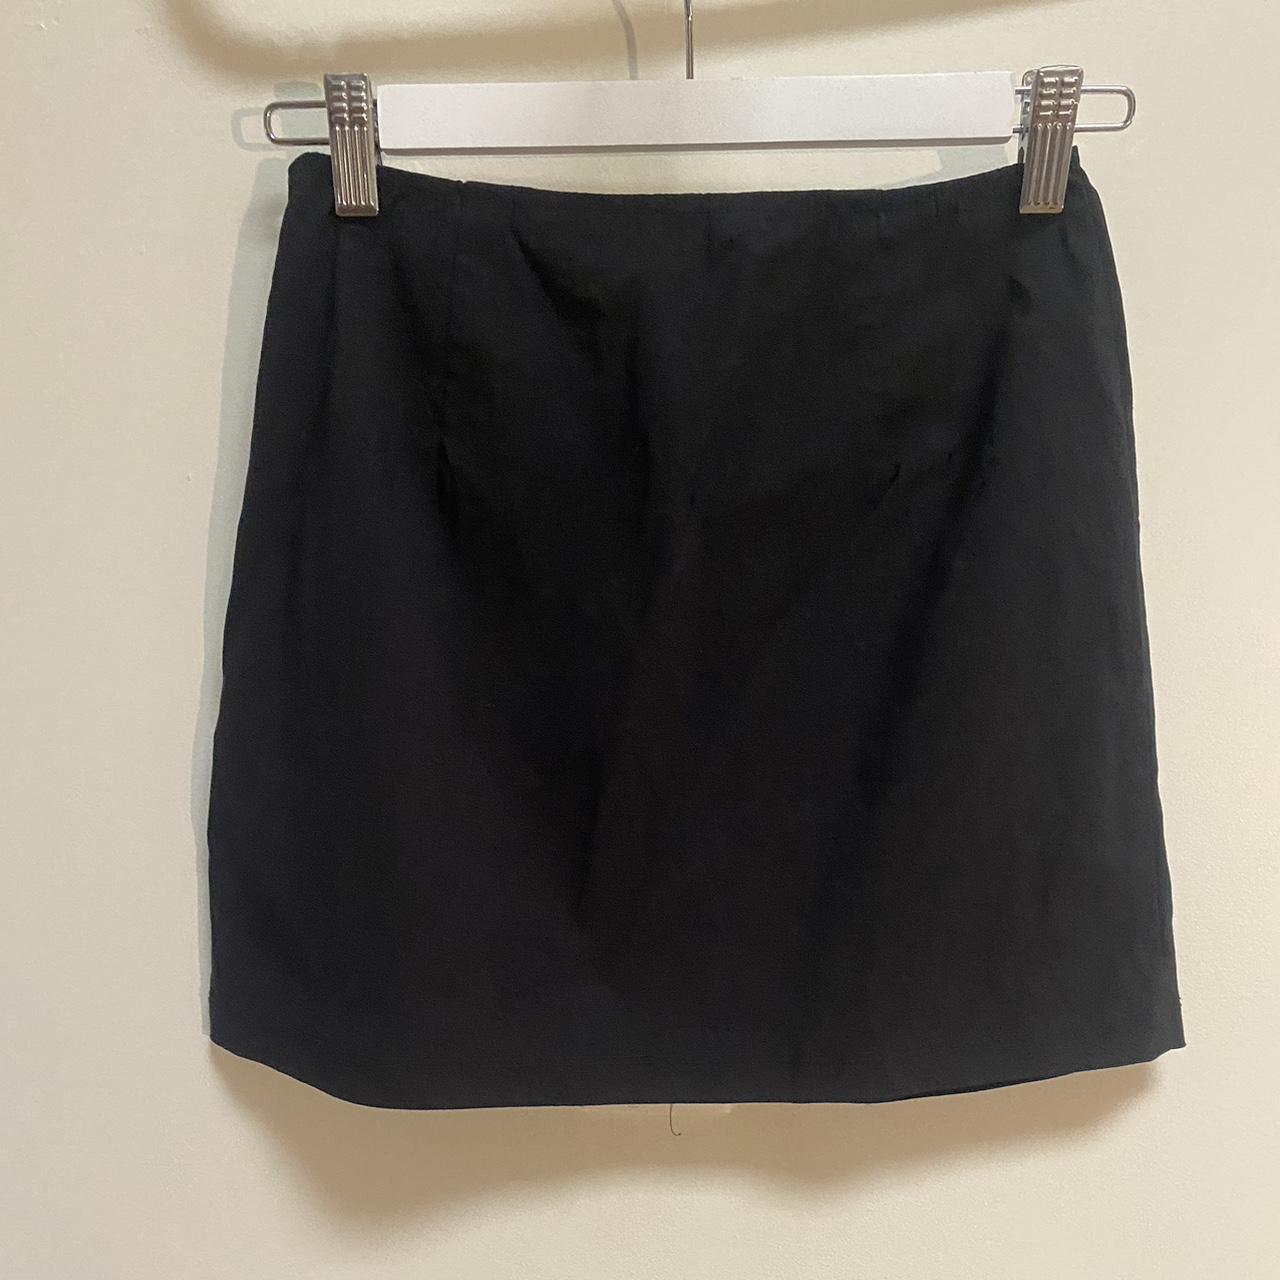 Glassons mini skirt hardly worn size 8🖤 - Depop